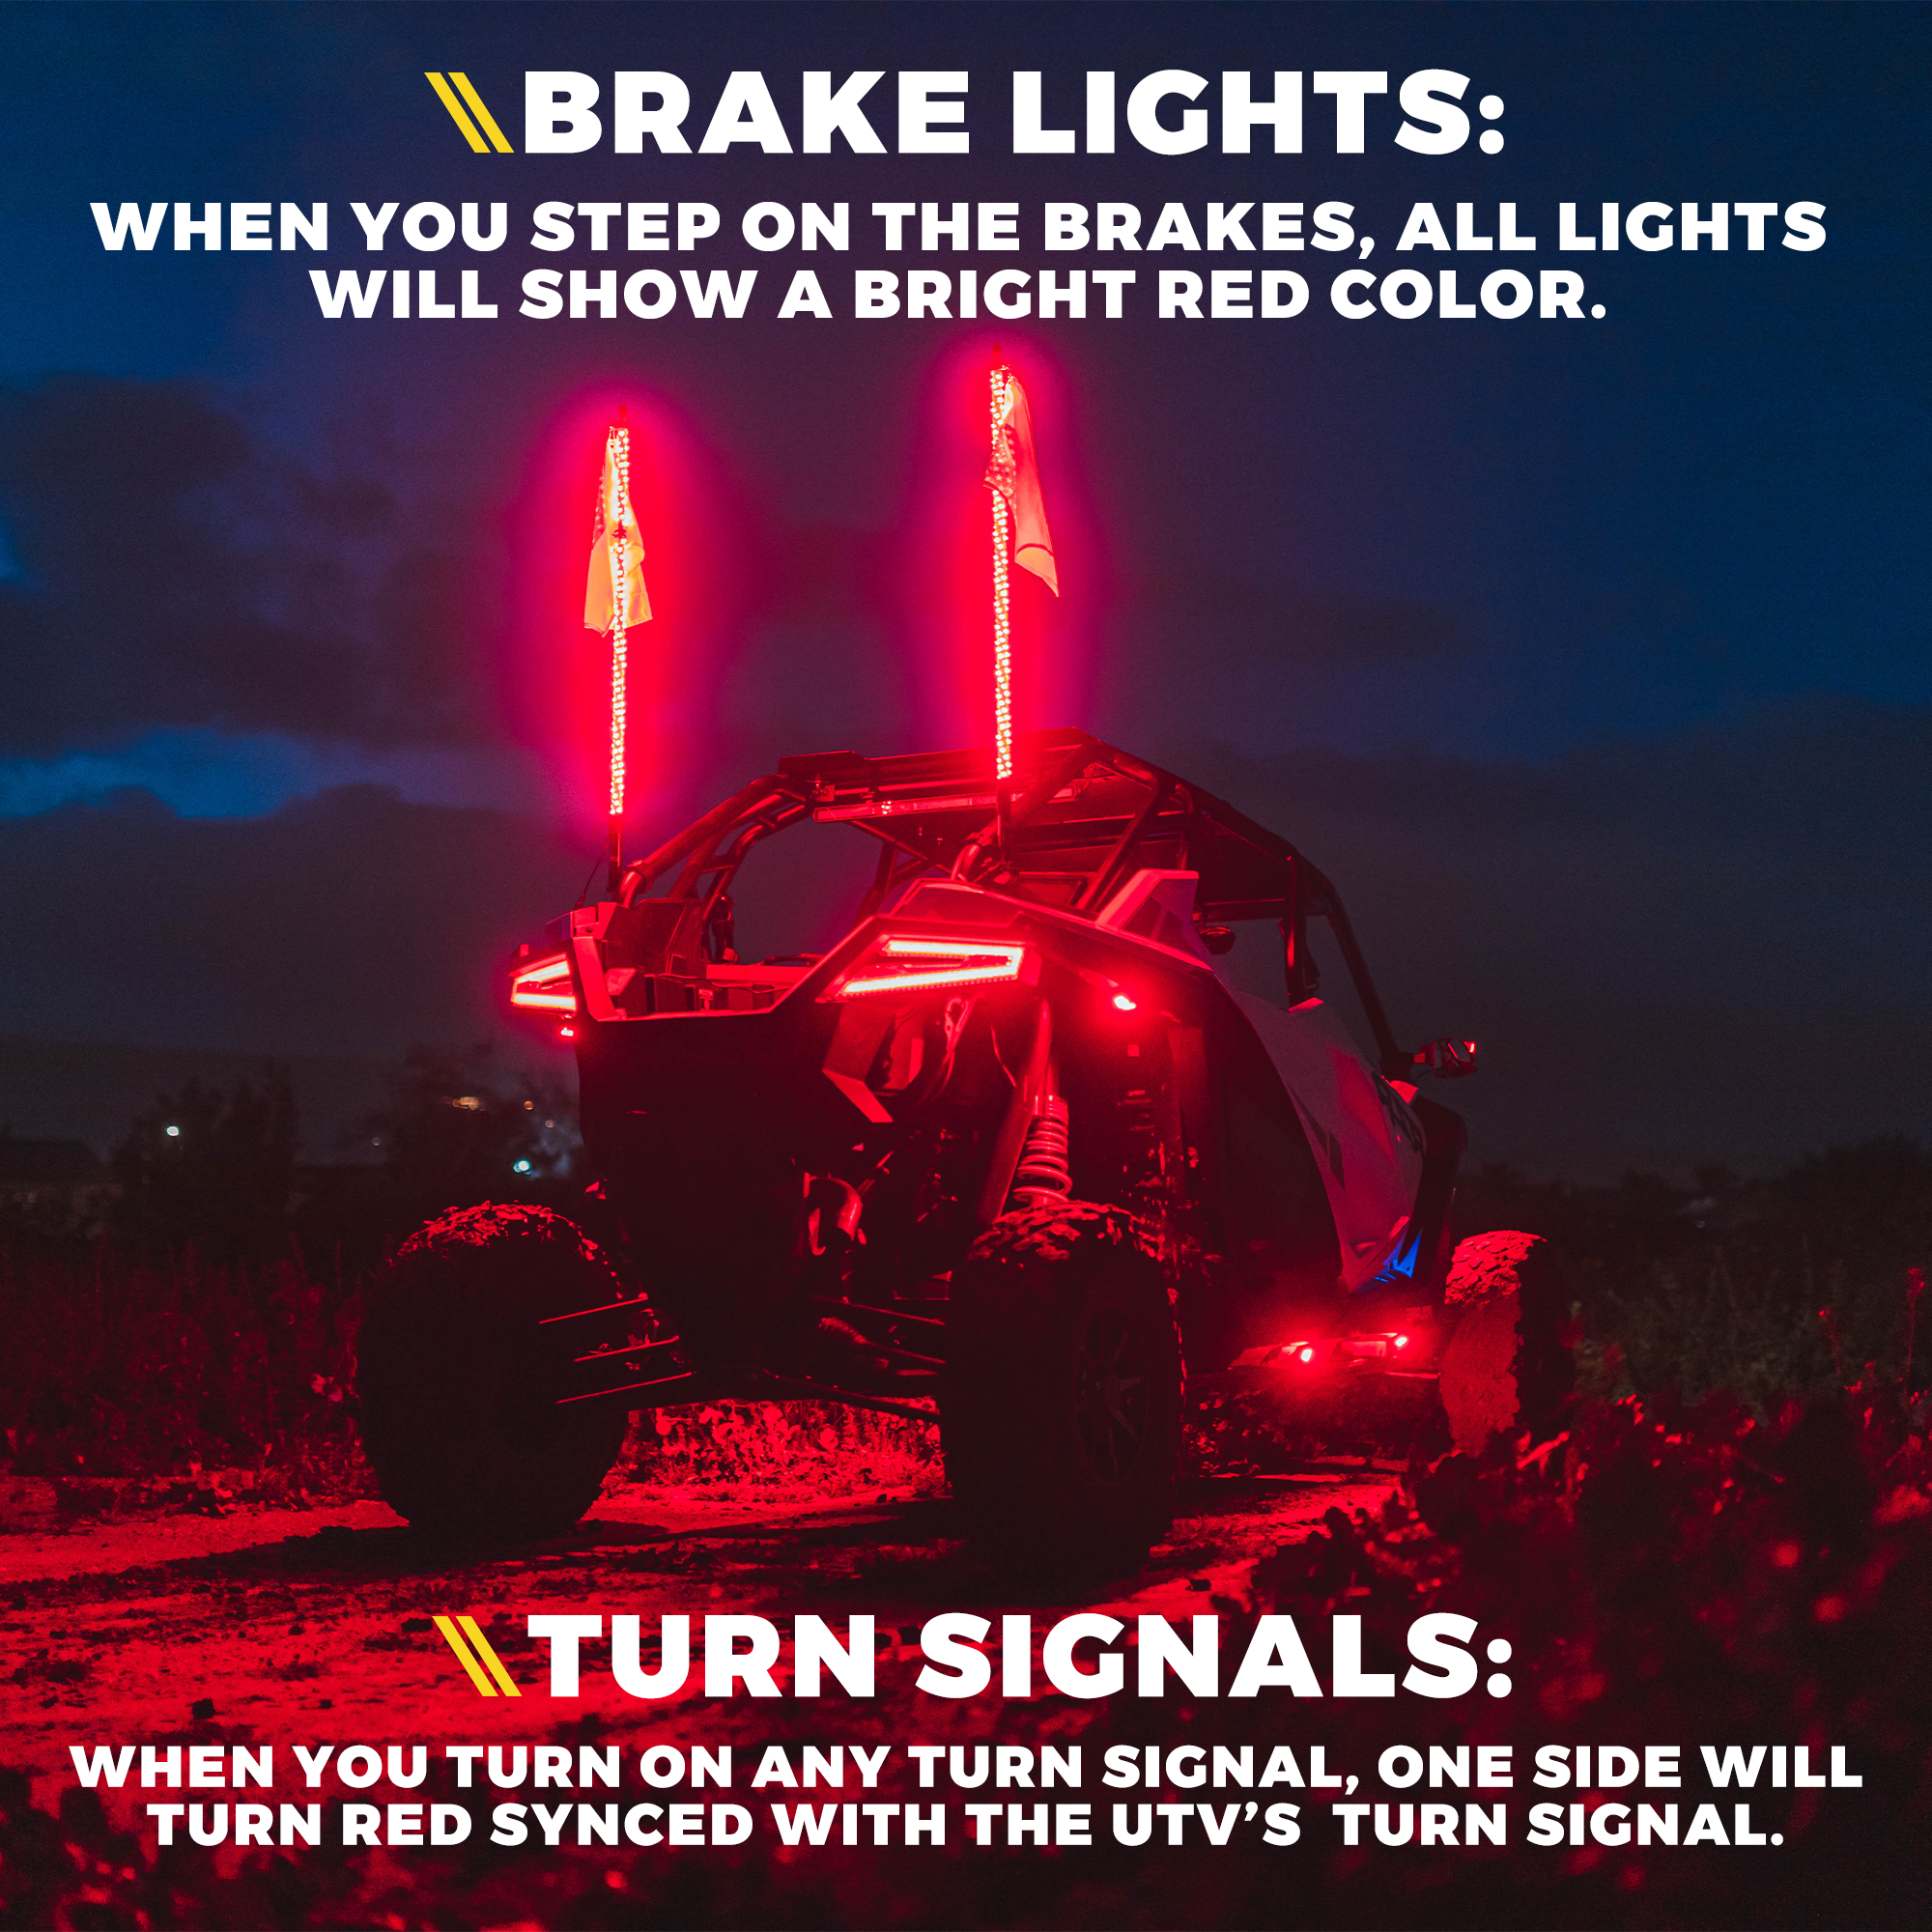 Multi-Color LED RGB-W Rock Lights